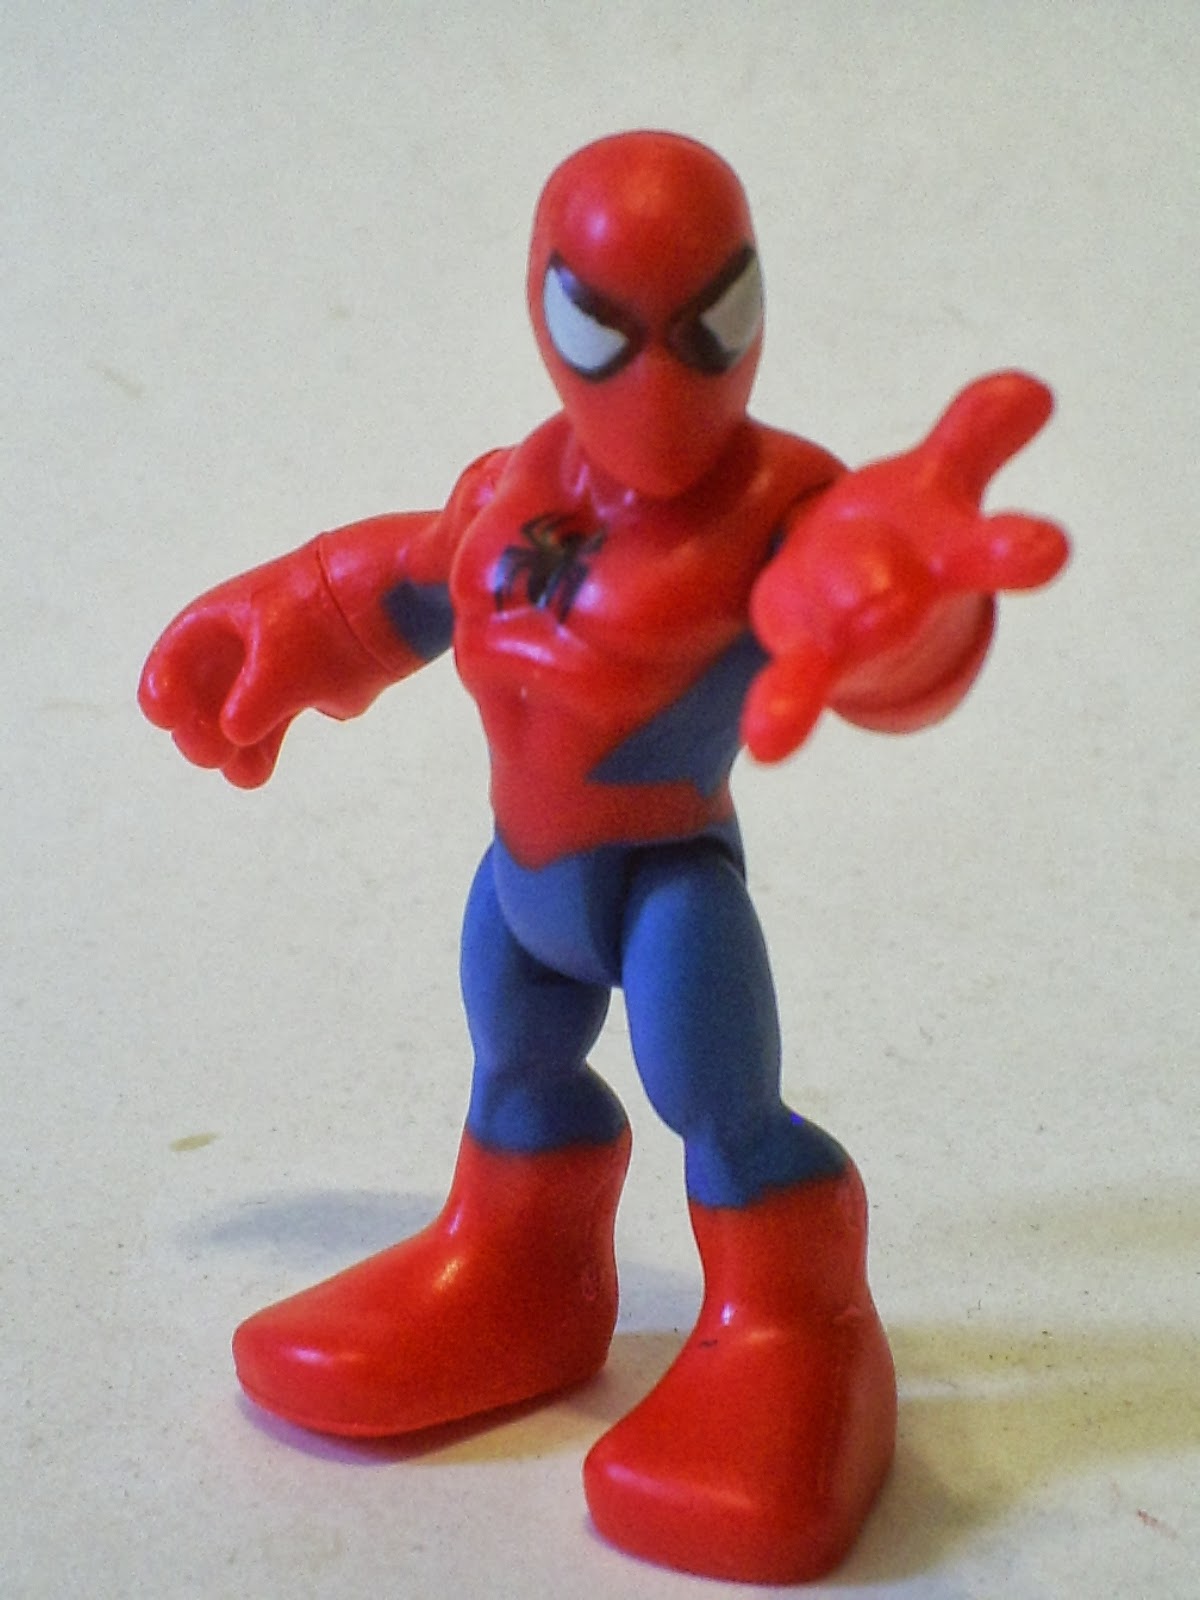 That Figures REVIEW Marvel Super Hero Adventures SpiderMan